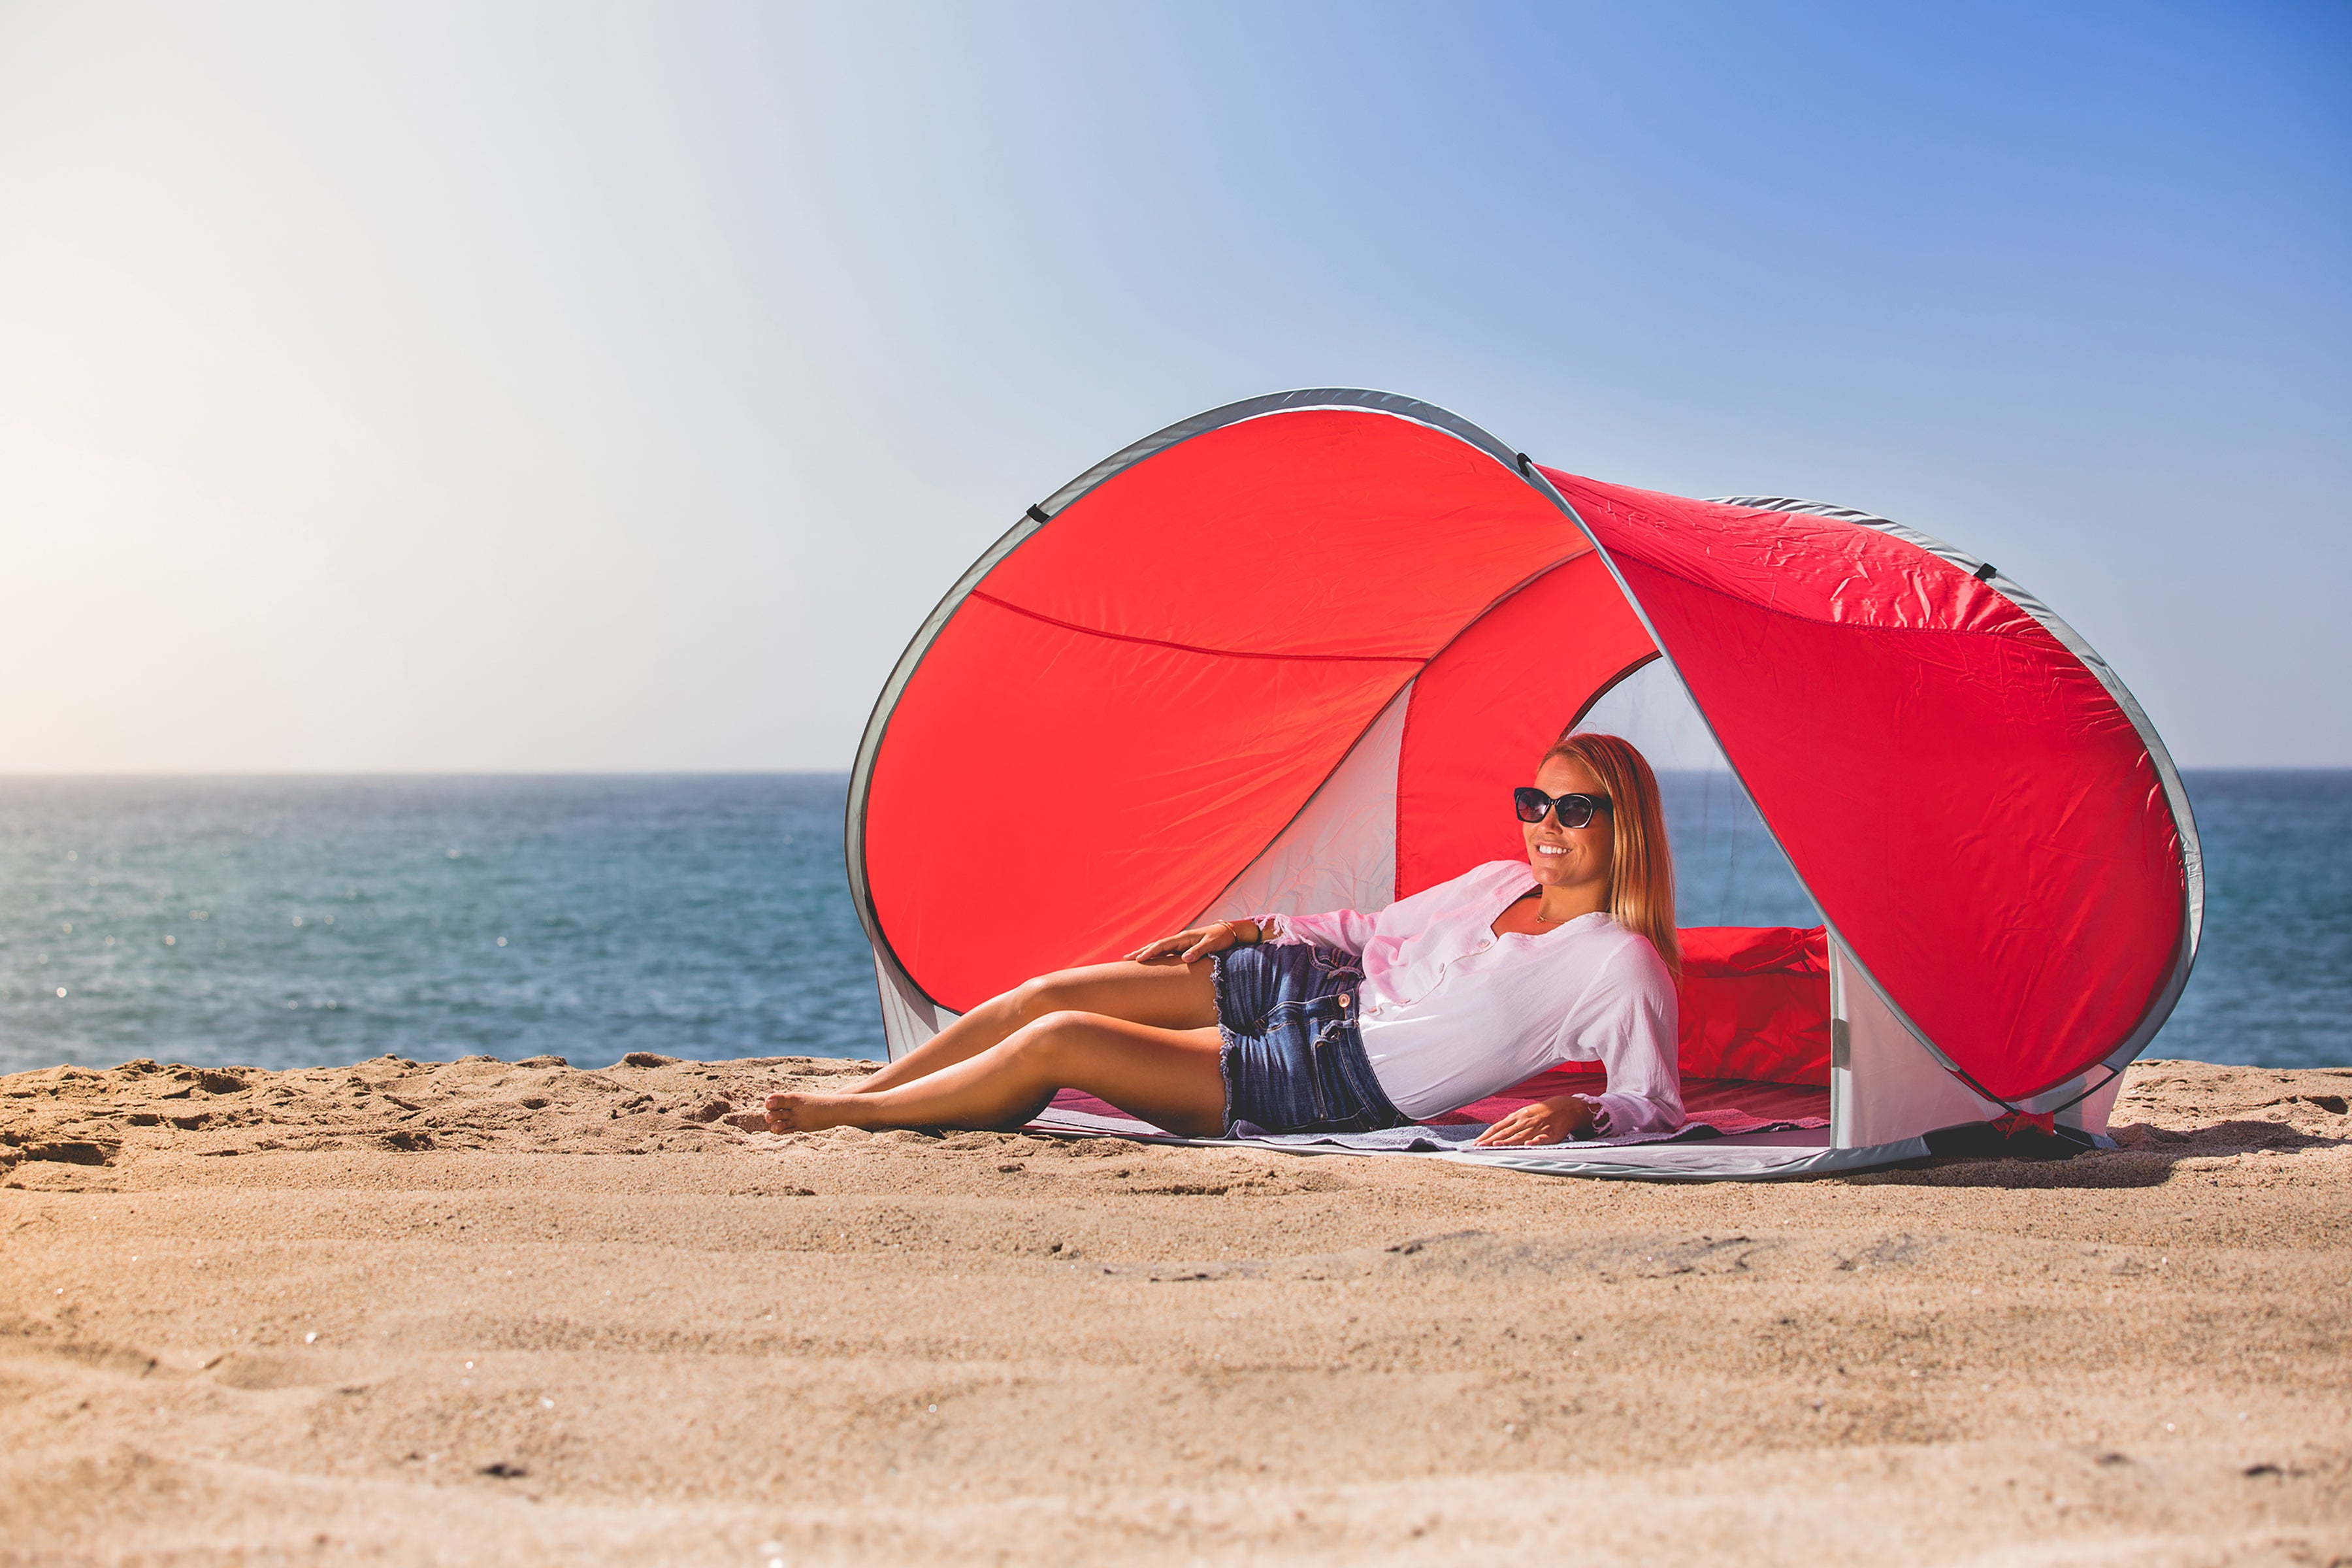 USC Trojans - Manta Portable Beach Tent